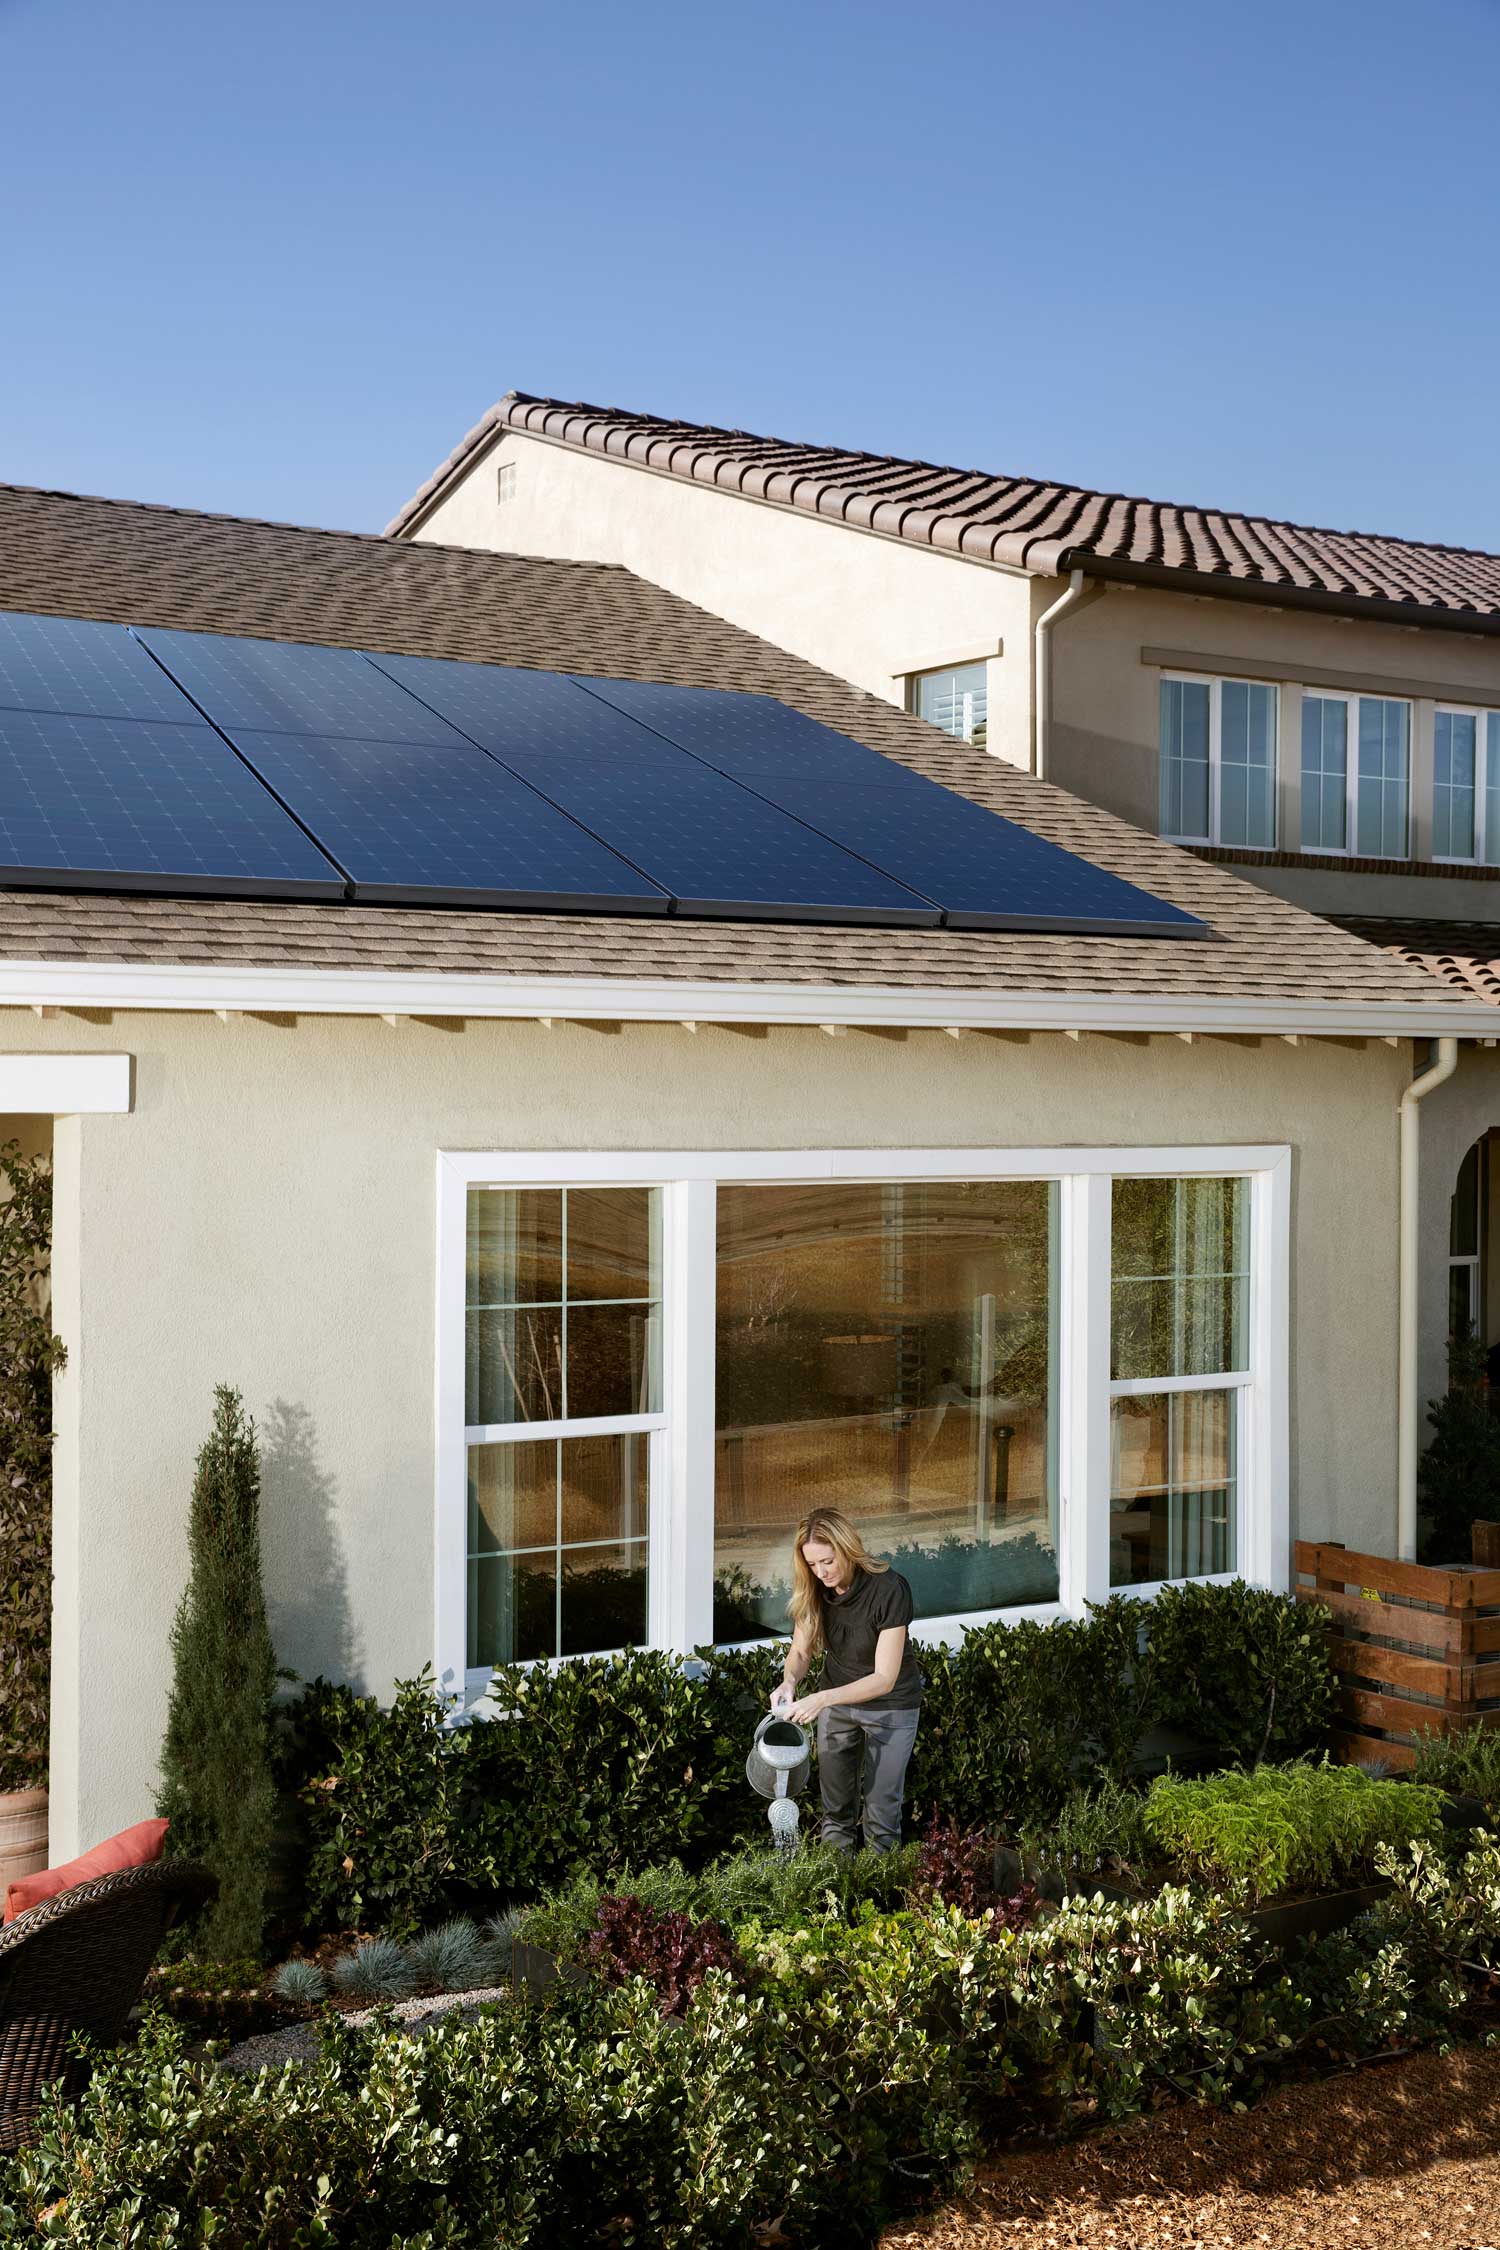 SunPower by Custom Energy is the best company for solar savings in Lehi.